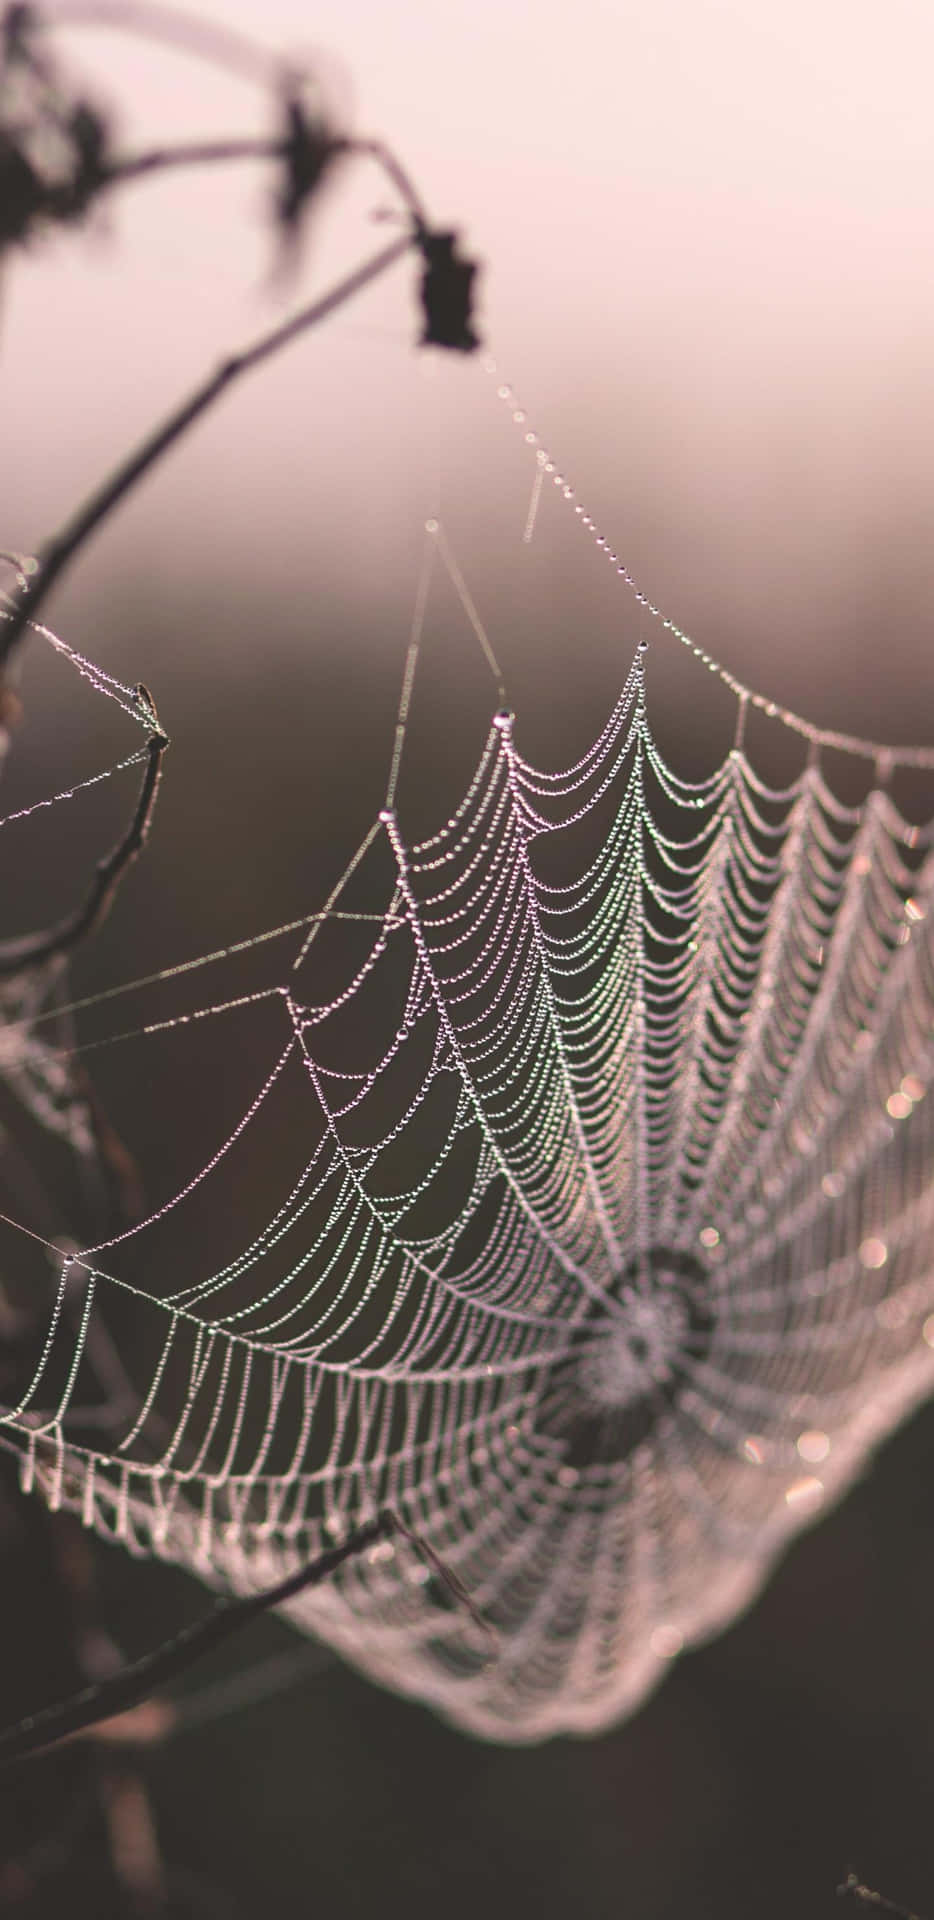 Dewy Spider Web Morning Light Wallpaper